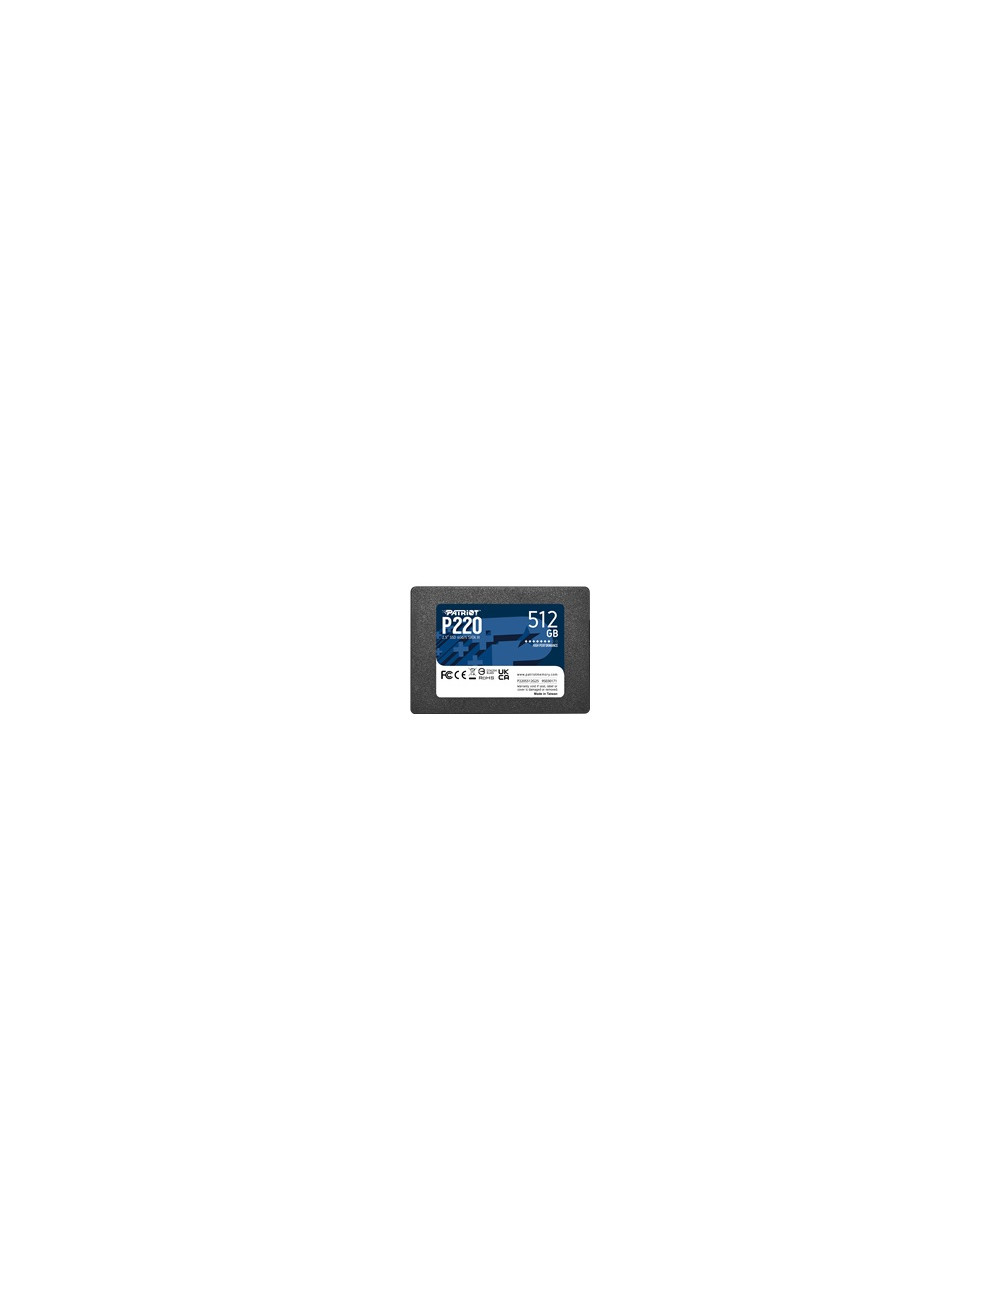 PATRIOT P220 SATA 3 512GB SSD